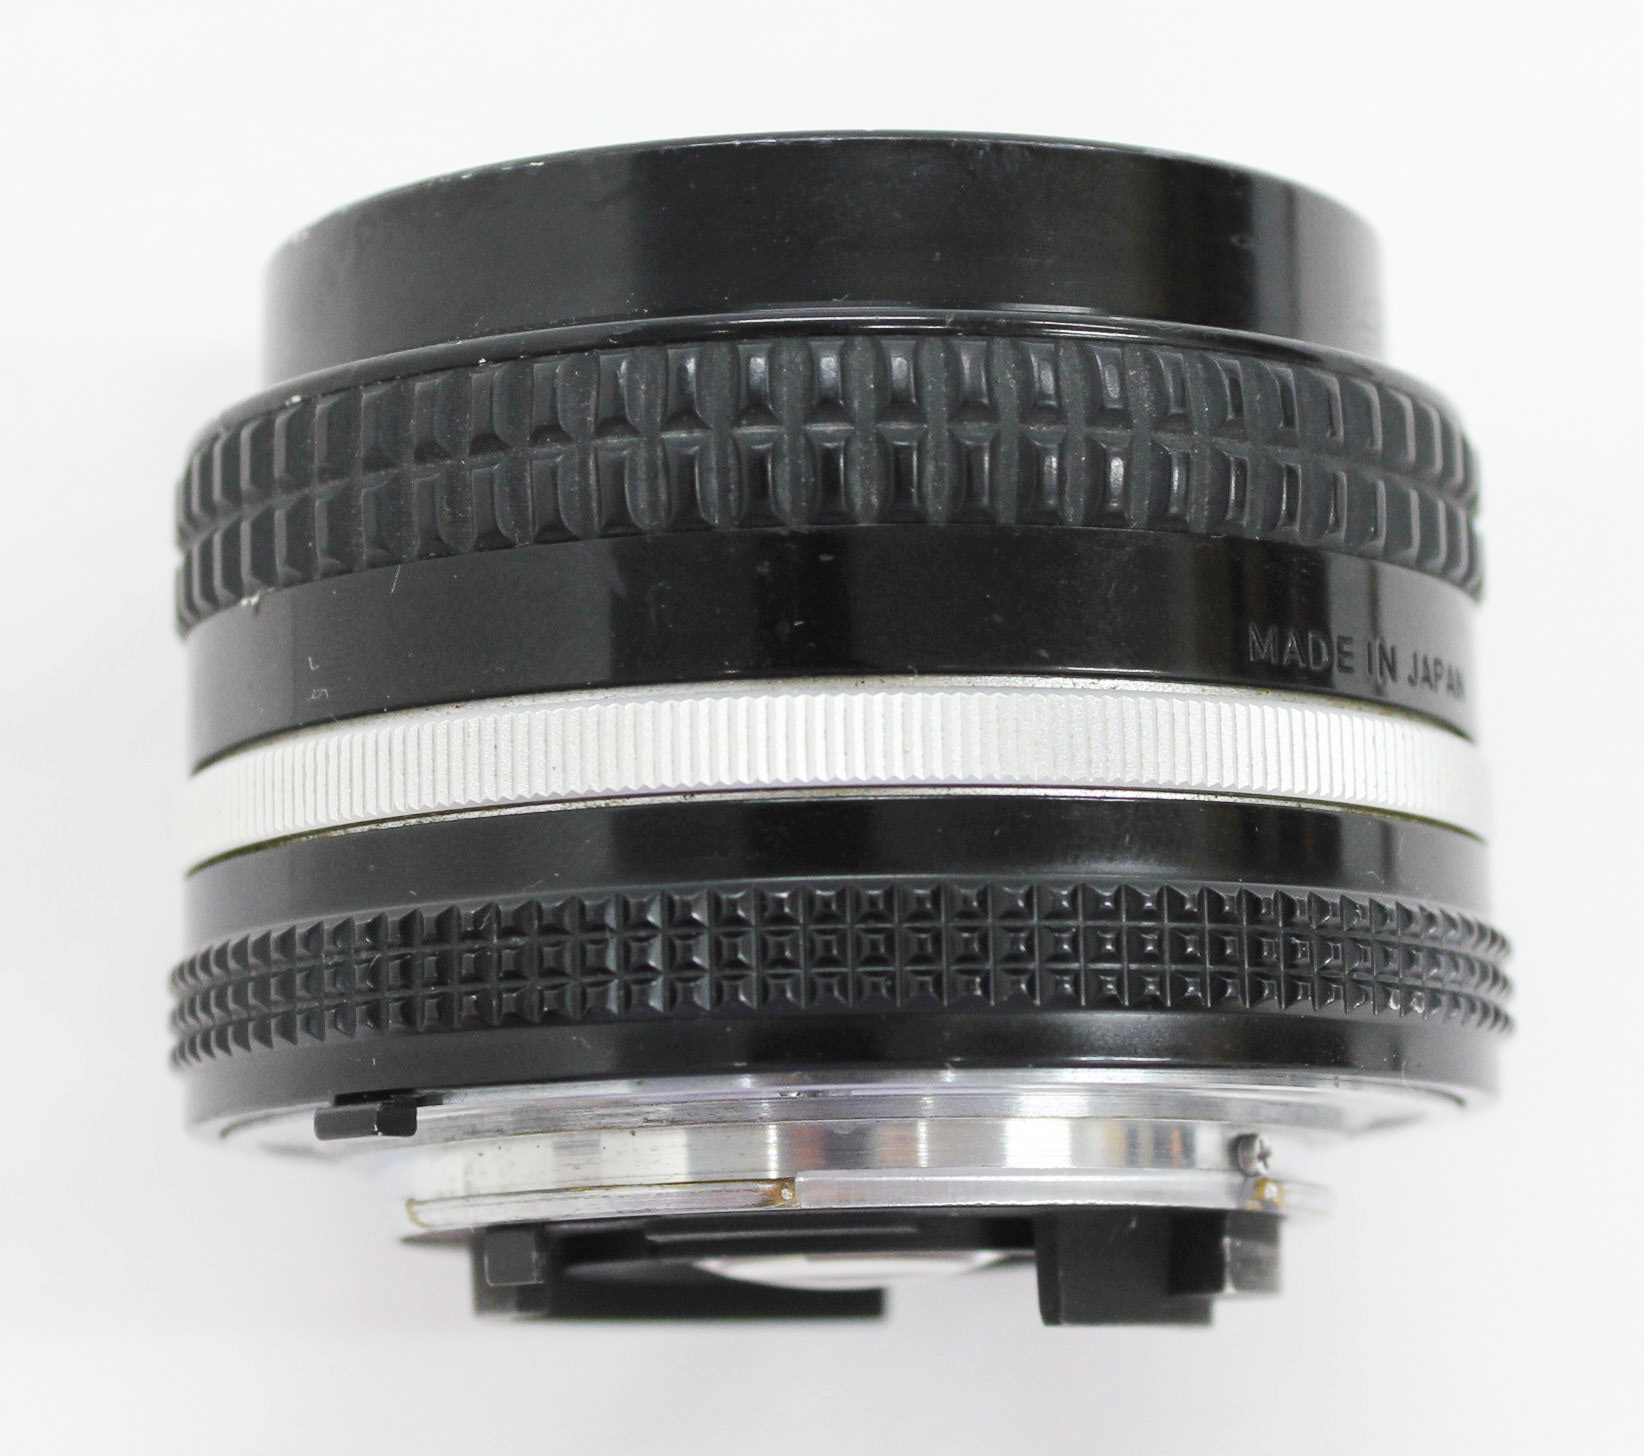  Nikon Ai-s Ais Nikkor 20mm F/3.5 Wide Angle MF Lens from Japan Photo 4